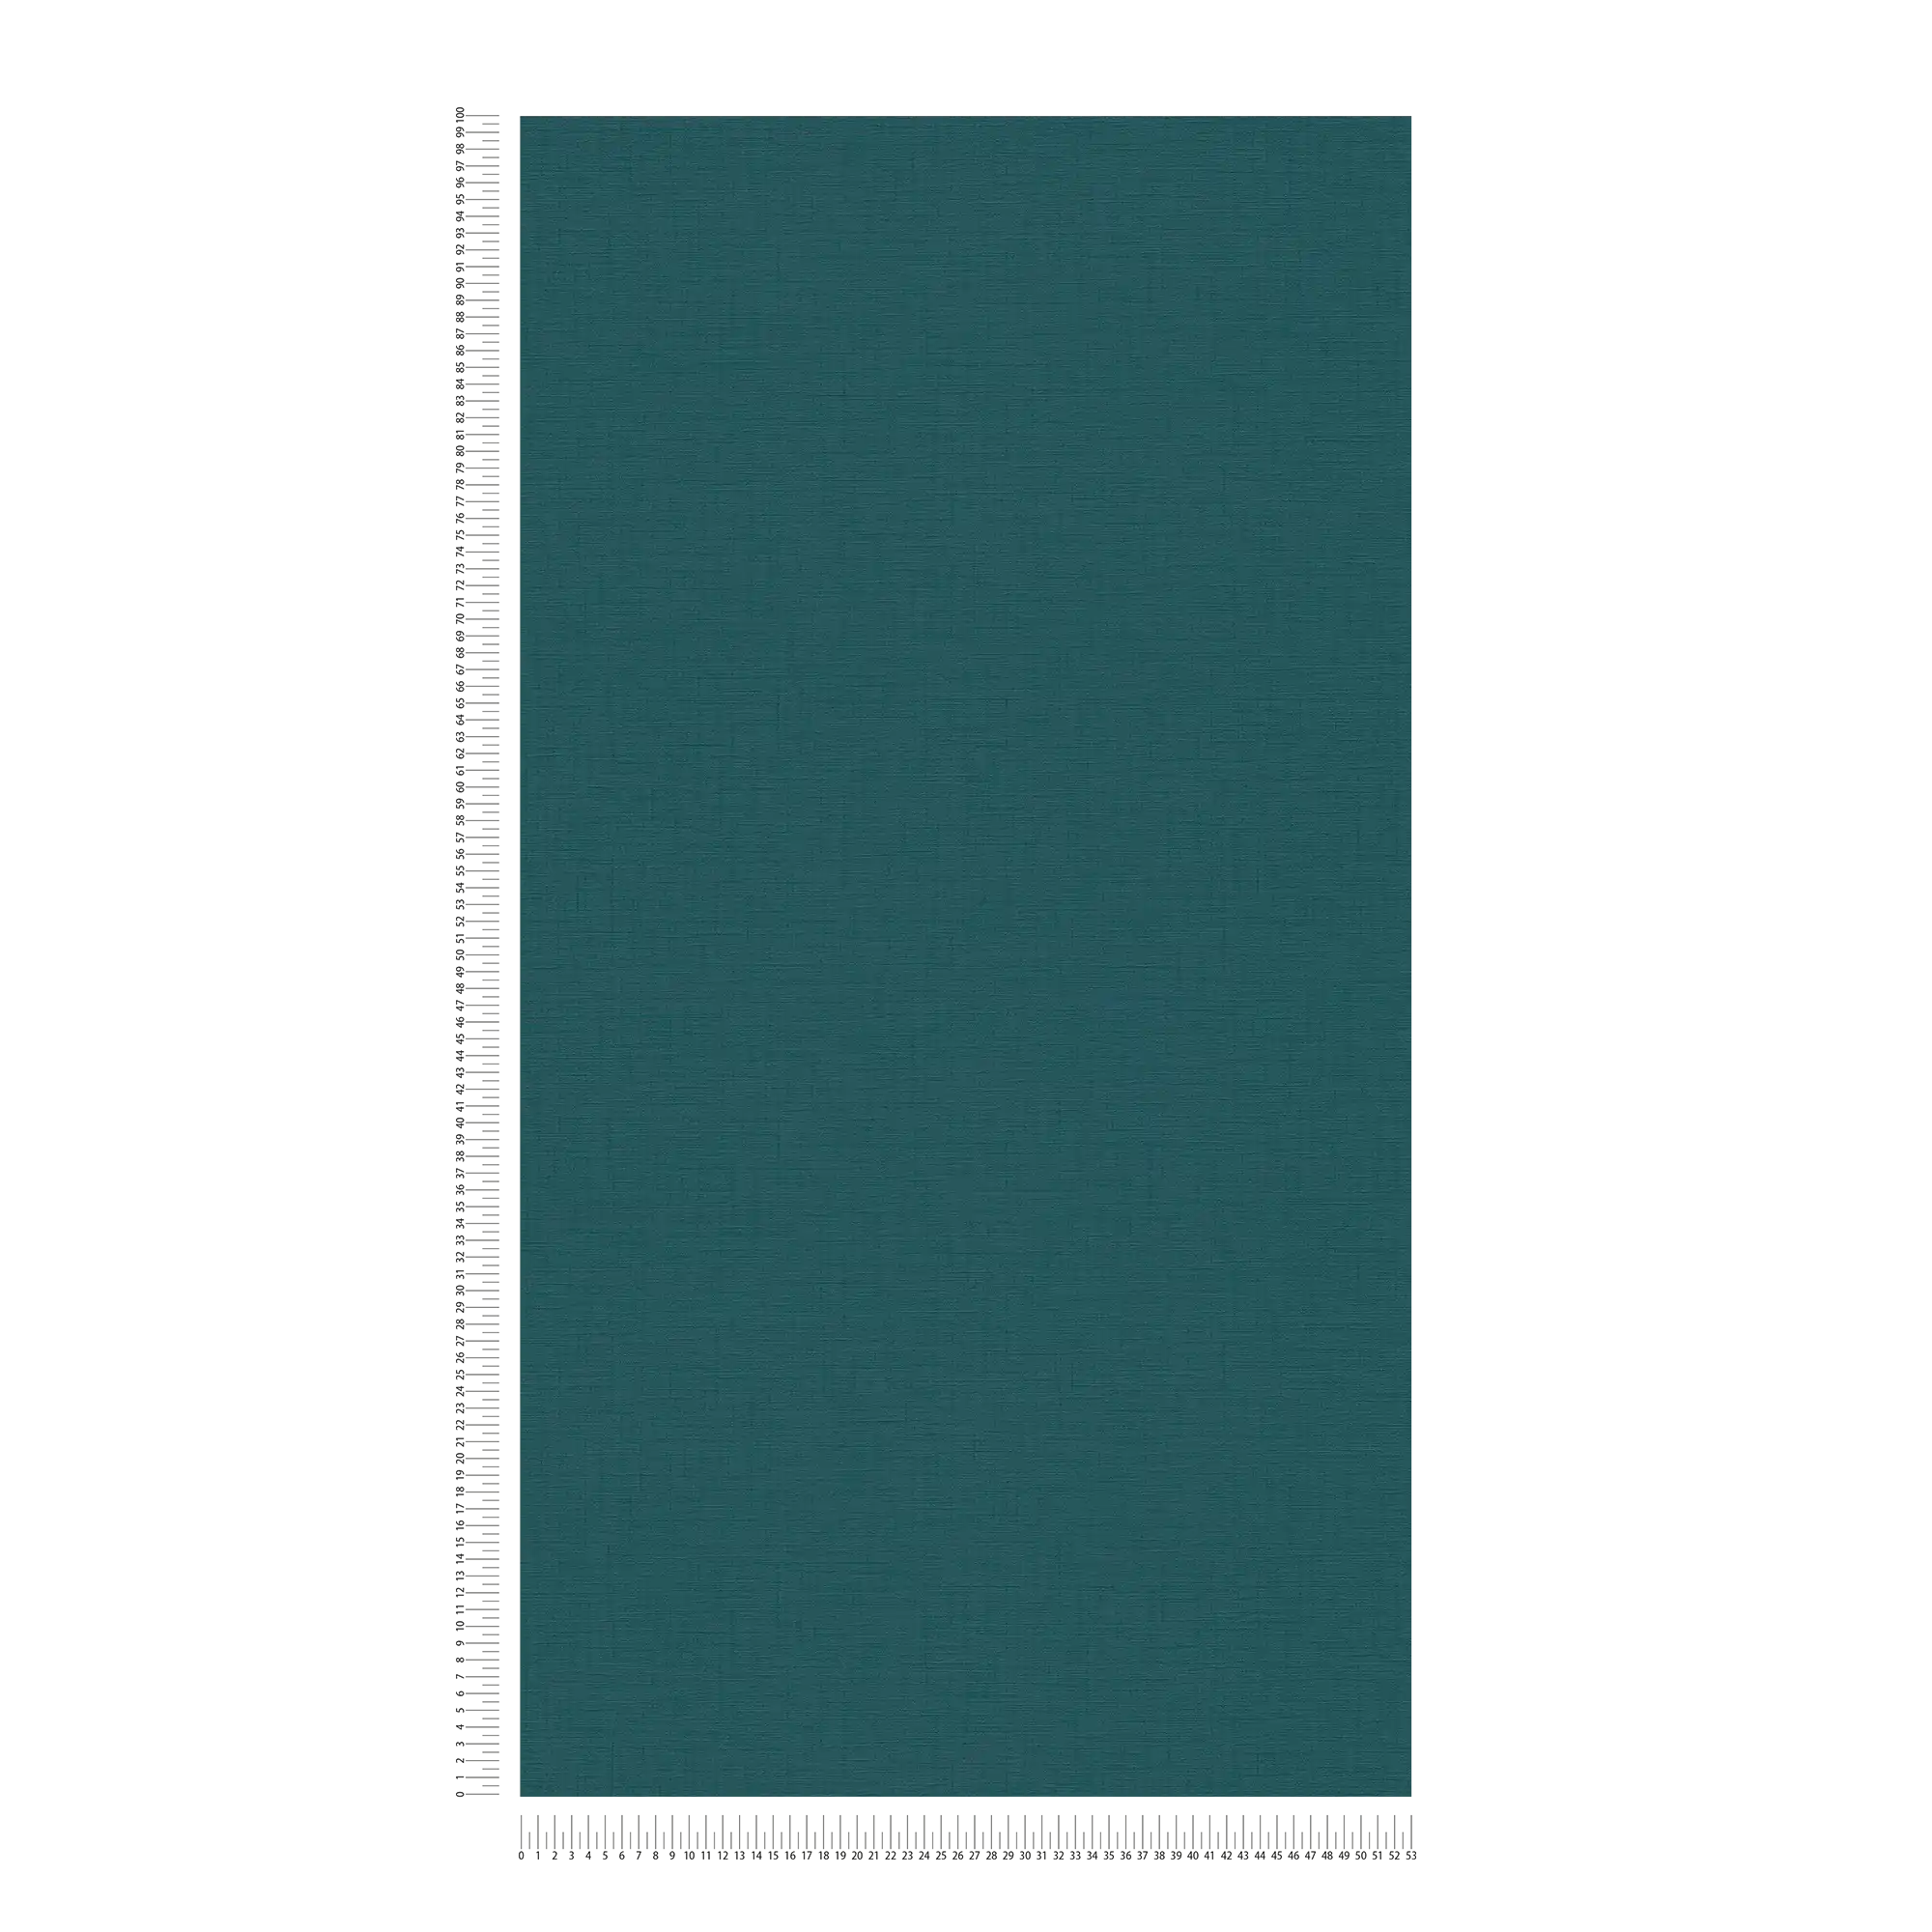             Petrol wallpaper plain colours with linen texture - blue, green
        